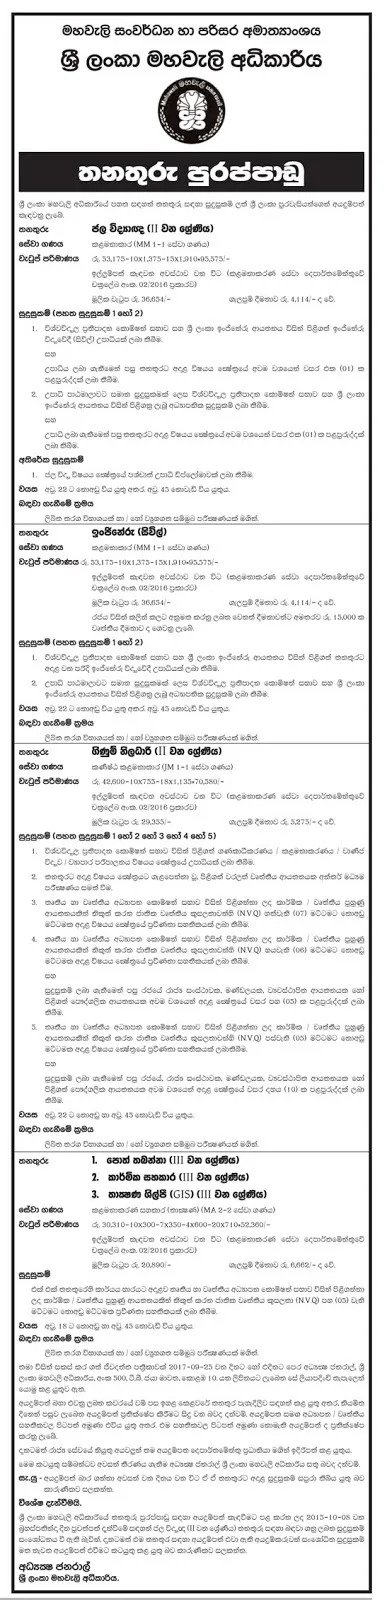 Sri Lanka Mahaweli Authority Vacancies